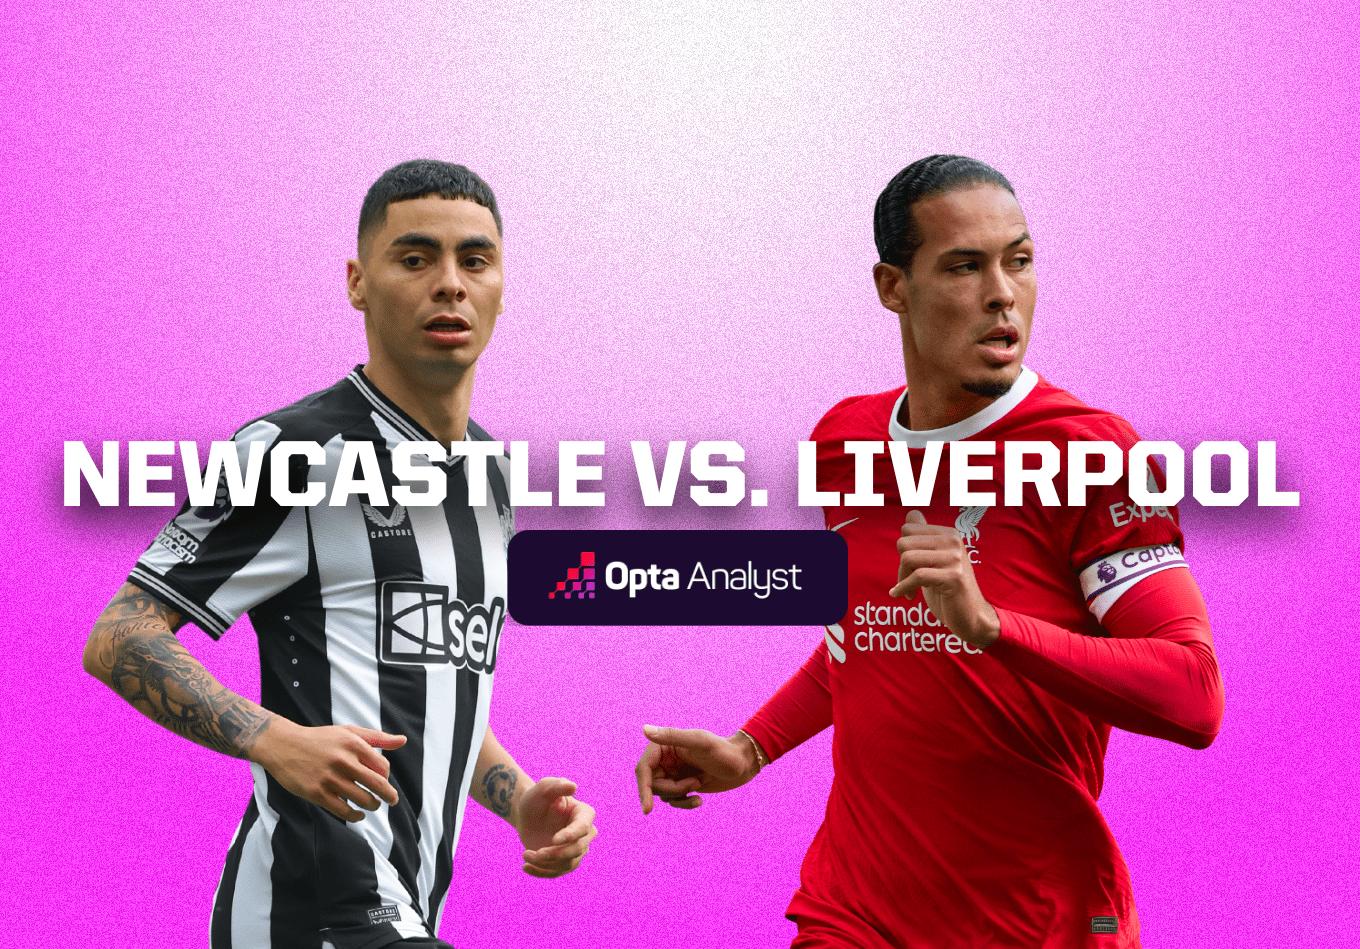 Newcastle vs Liverpool: Prediction and Preview